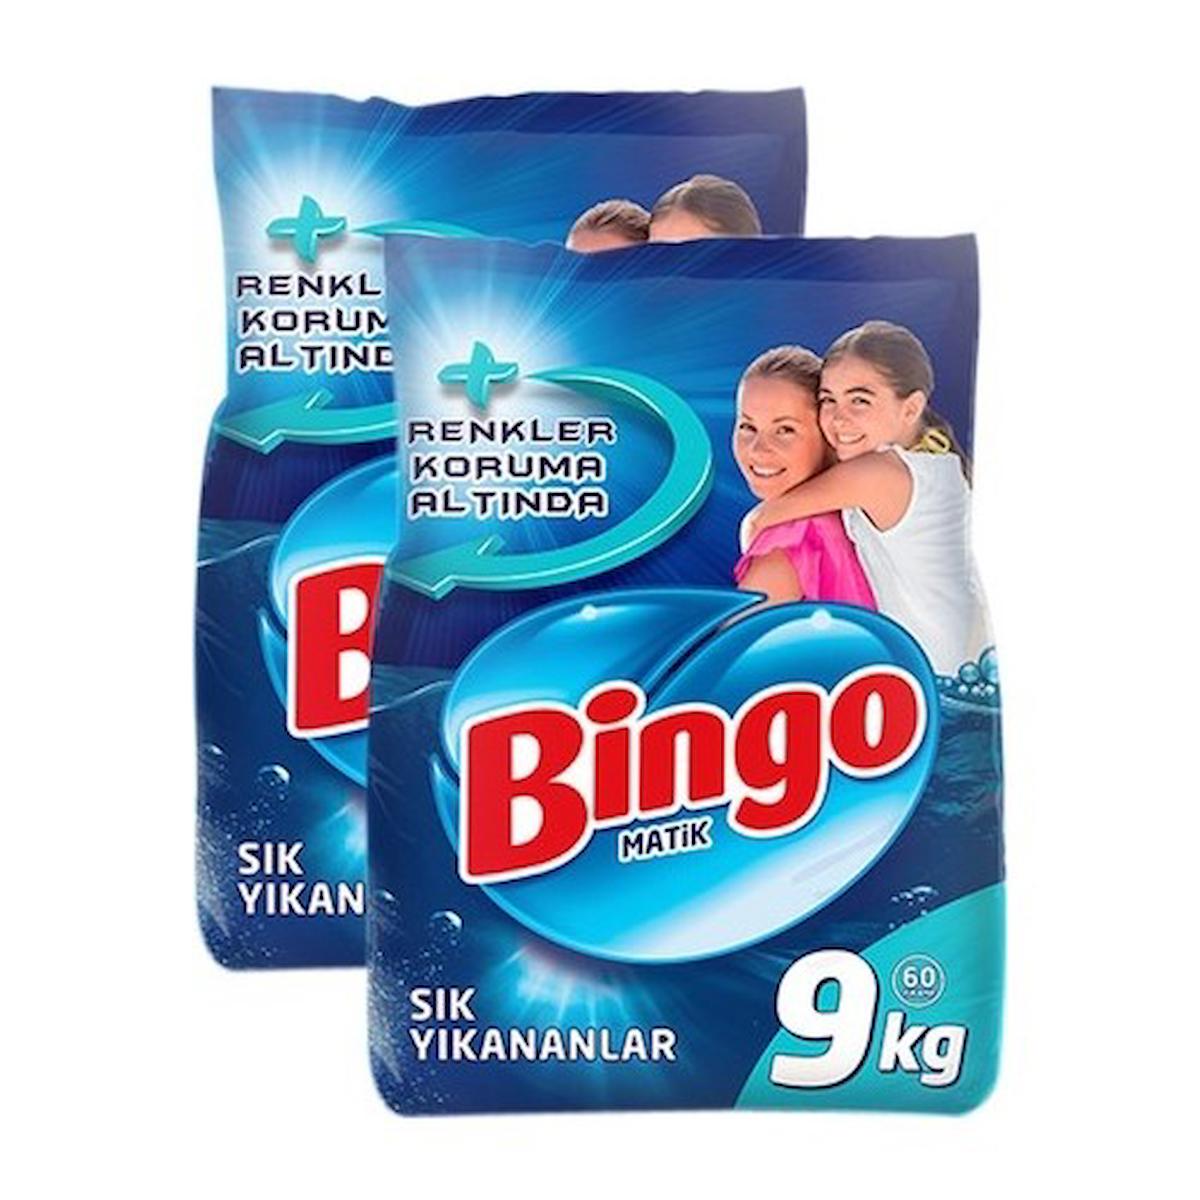 Bingo Matik Ekonomik Paket 9 kg 2 Adet